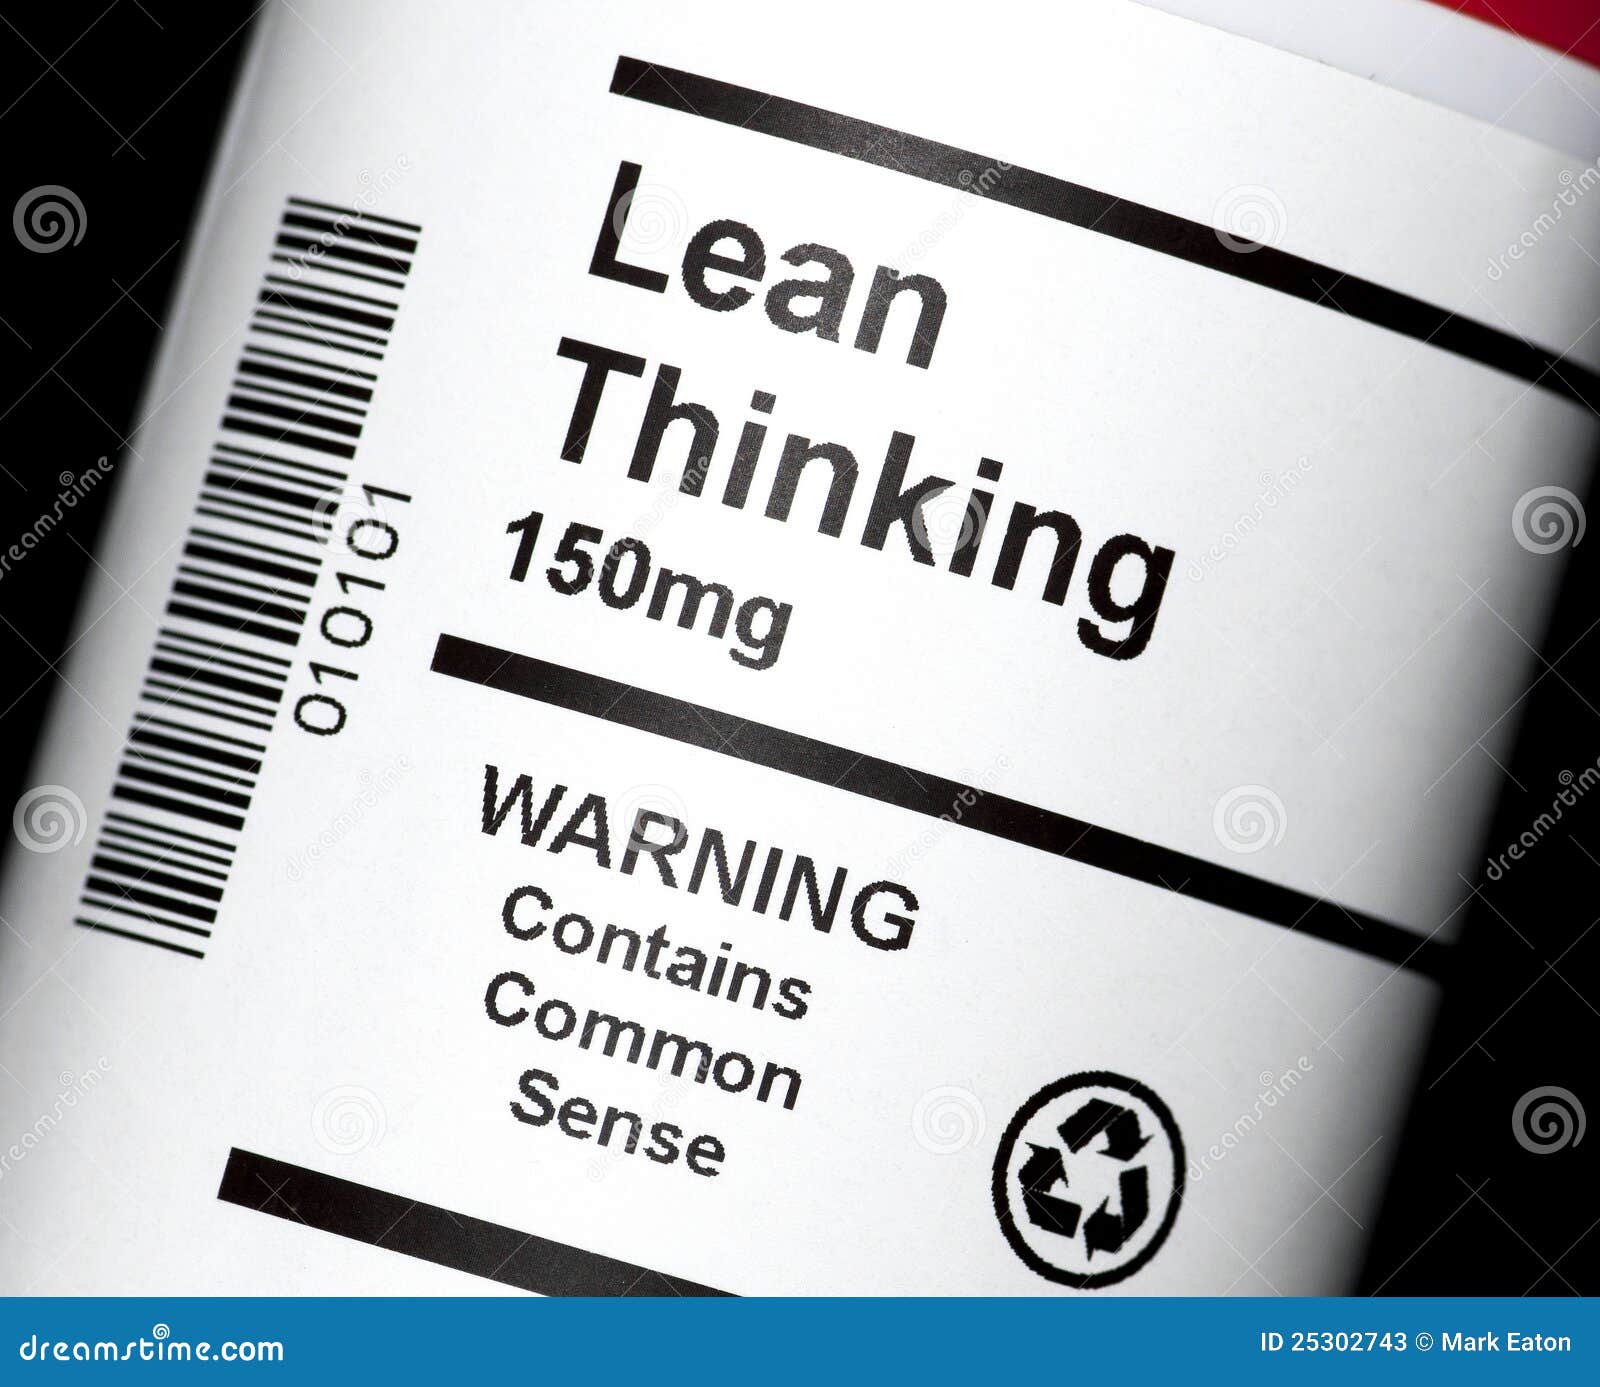 Lean Thinking Stock Photos - Image: 25302743